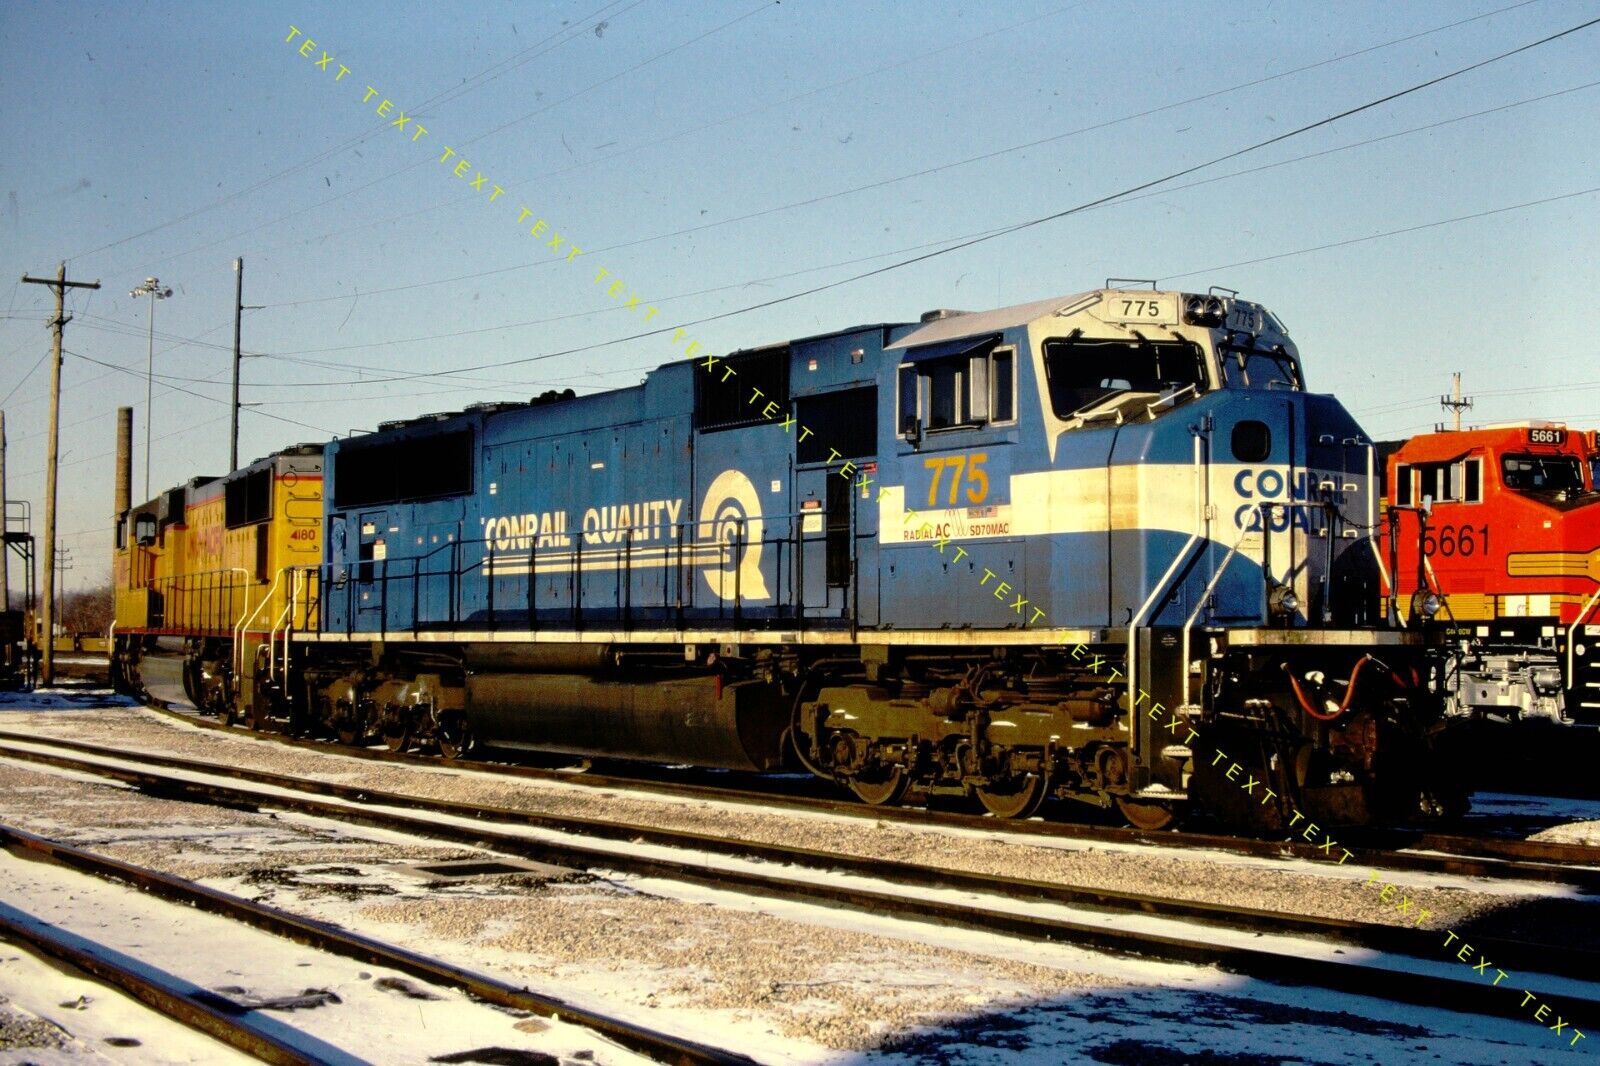 ORIGINAL RAIL  SLIDE CSX 775 conrail quality paint ➖ CSXT SD70MAC  Cleveland, OH